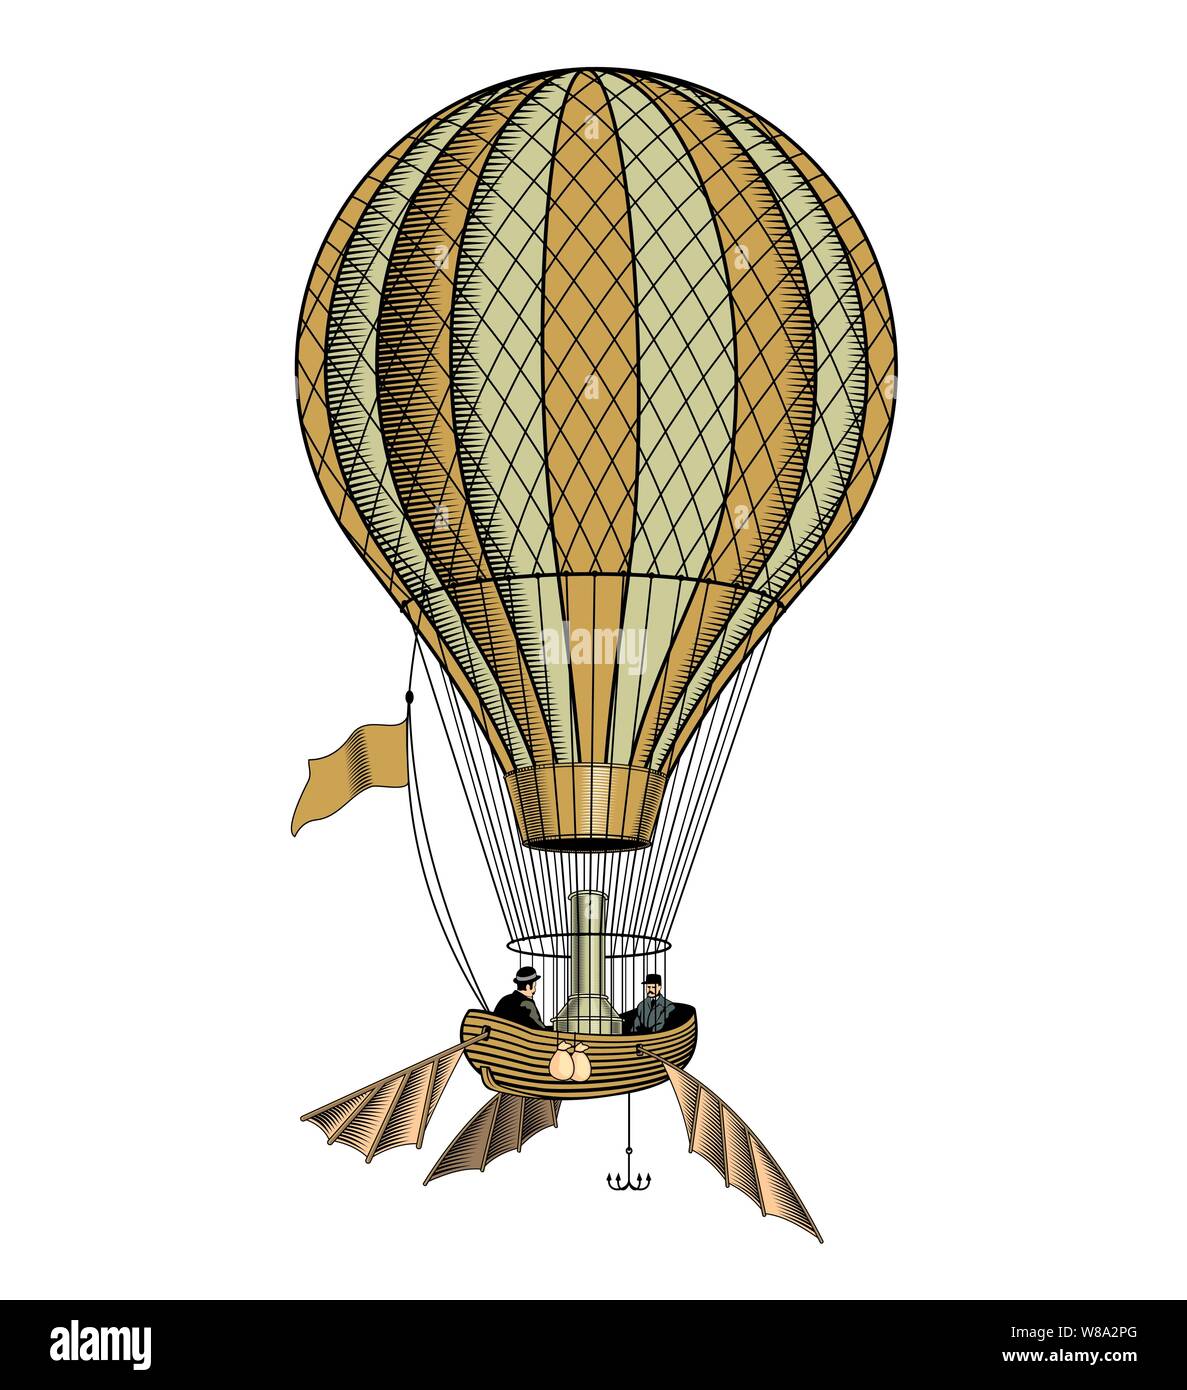 Vintage mongolfiera o aerostato, stile di incisione illustrazione vettoriale. Illustrazione Vettoriale